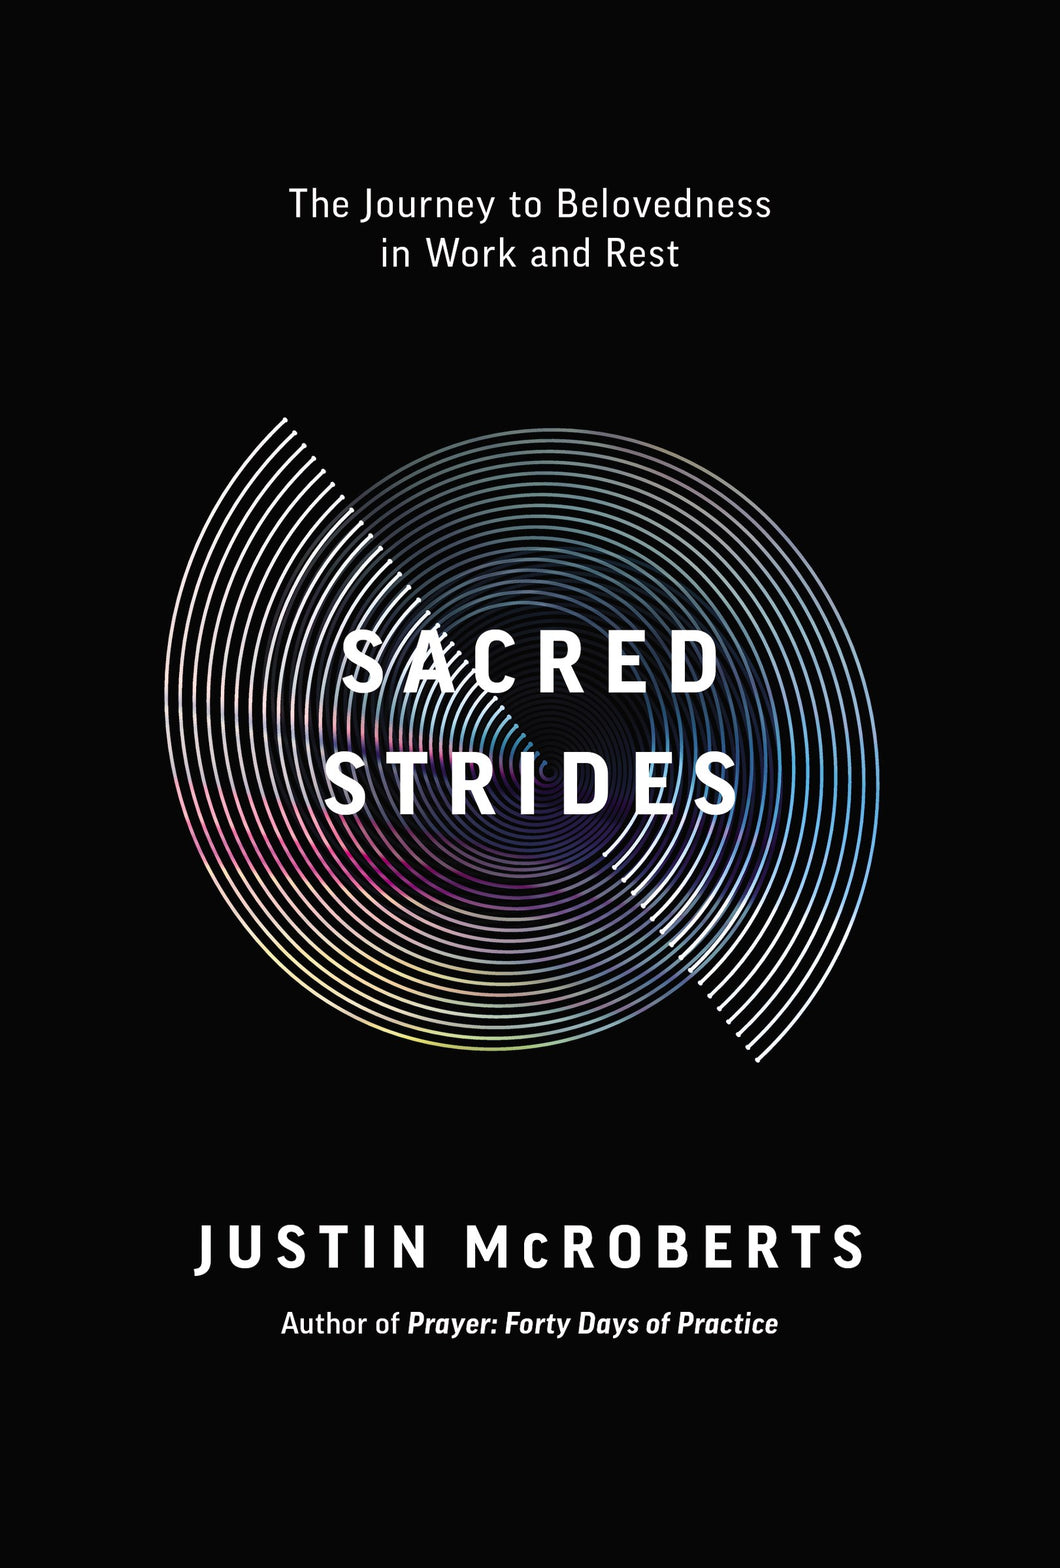 Sacred Strides